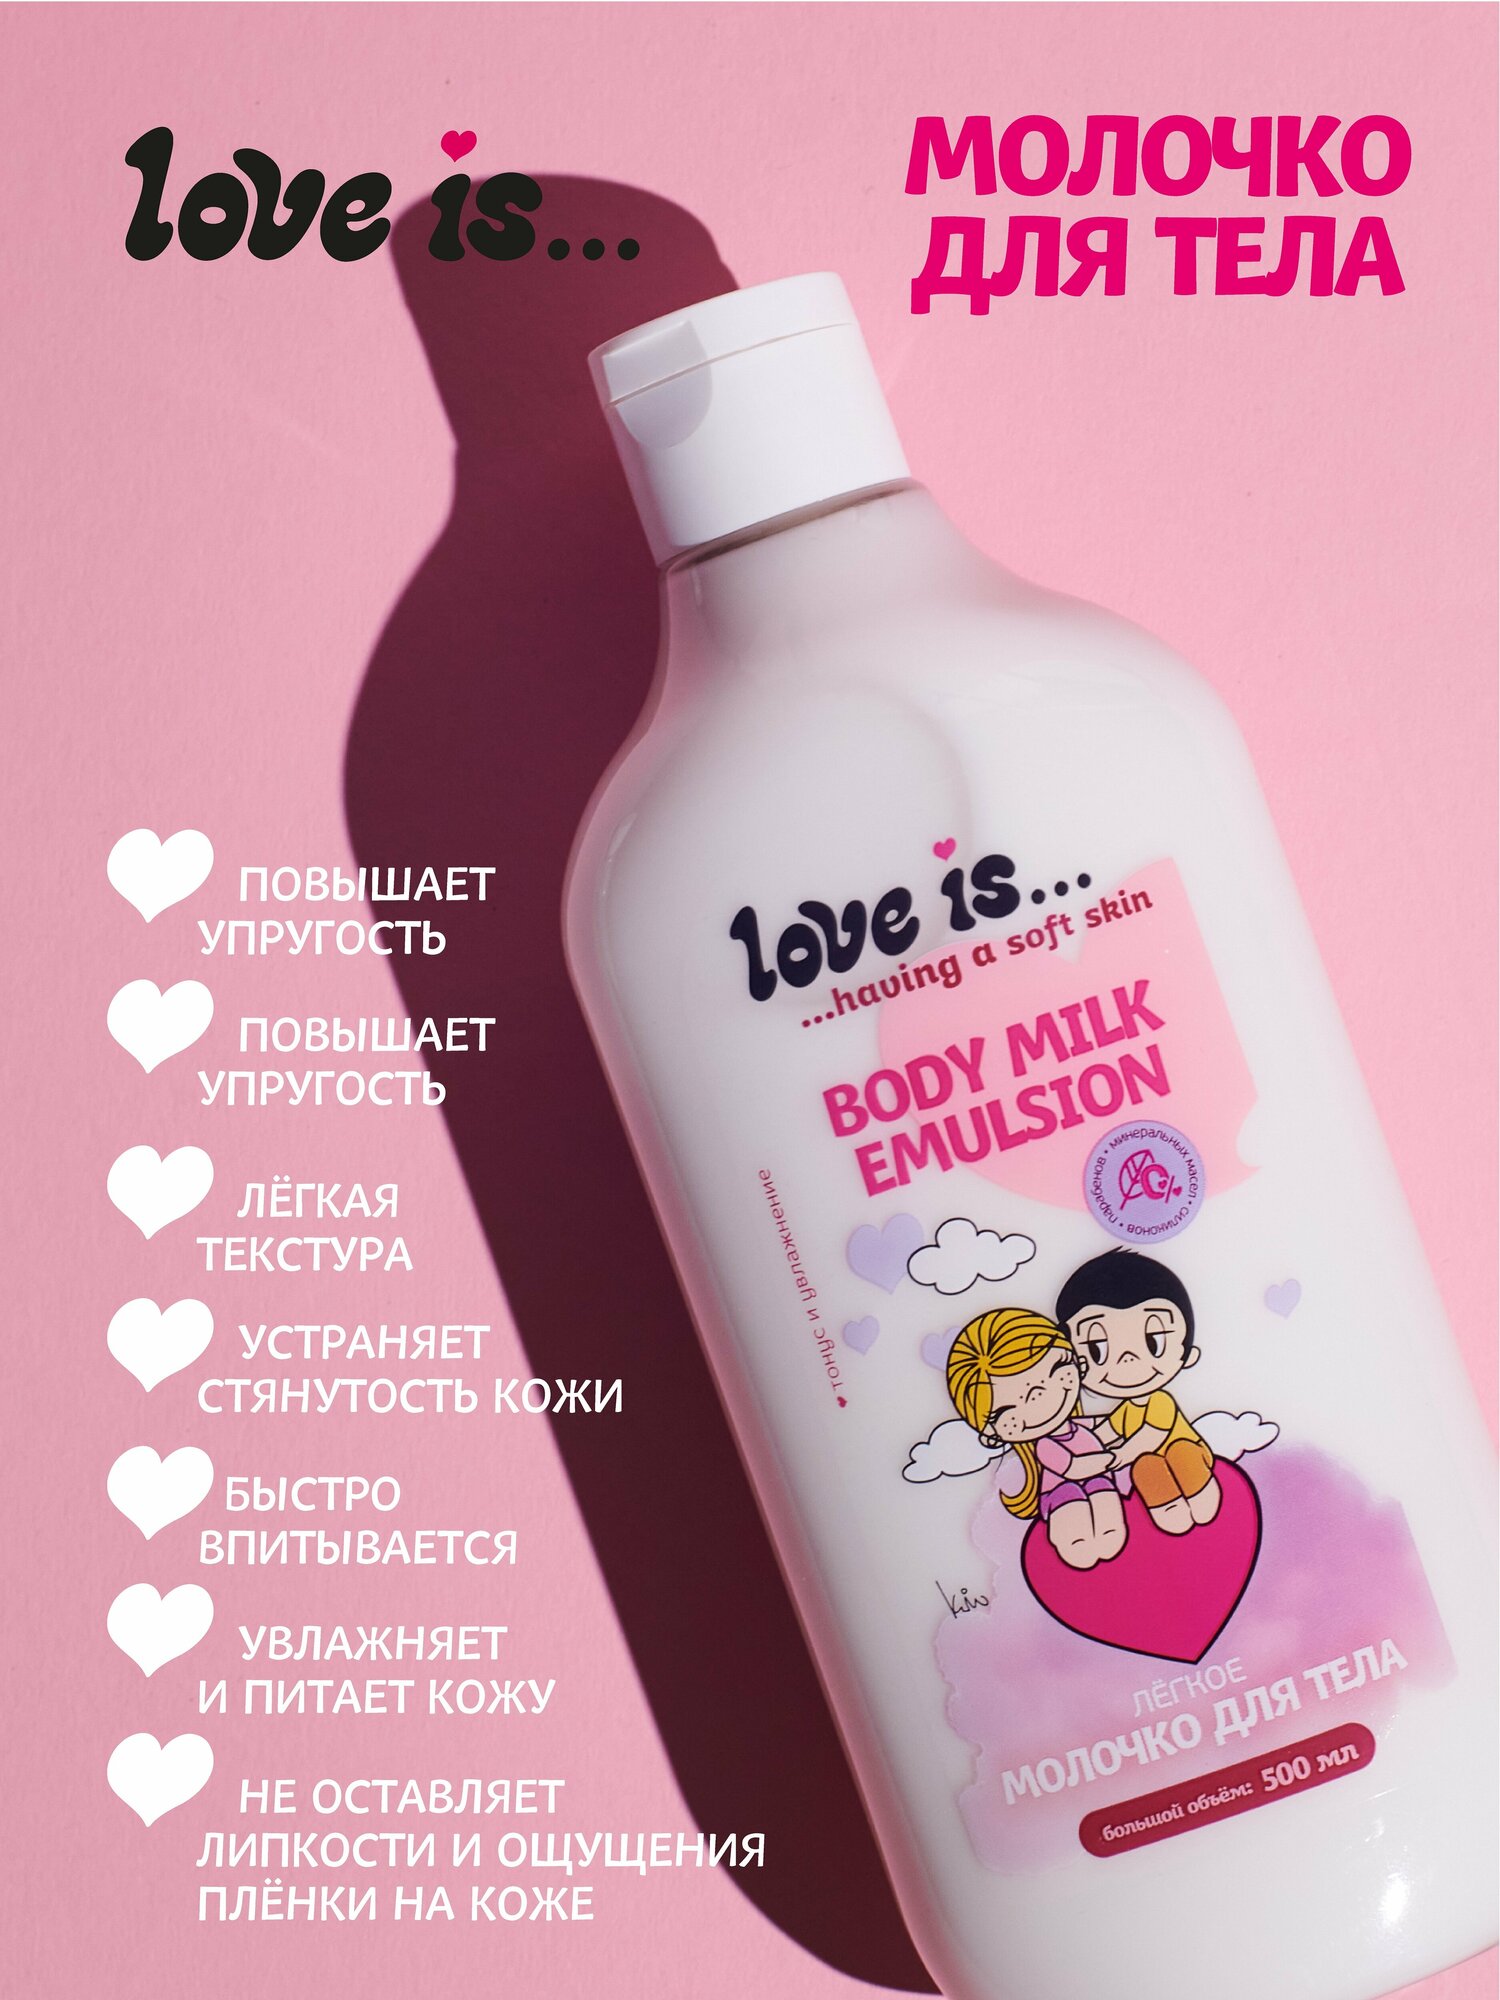 Молочко для тела LOVE IS Body milk emulsion 500 мл увлажняющее эмульсия